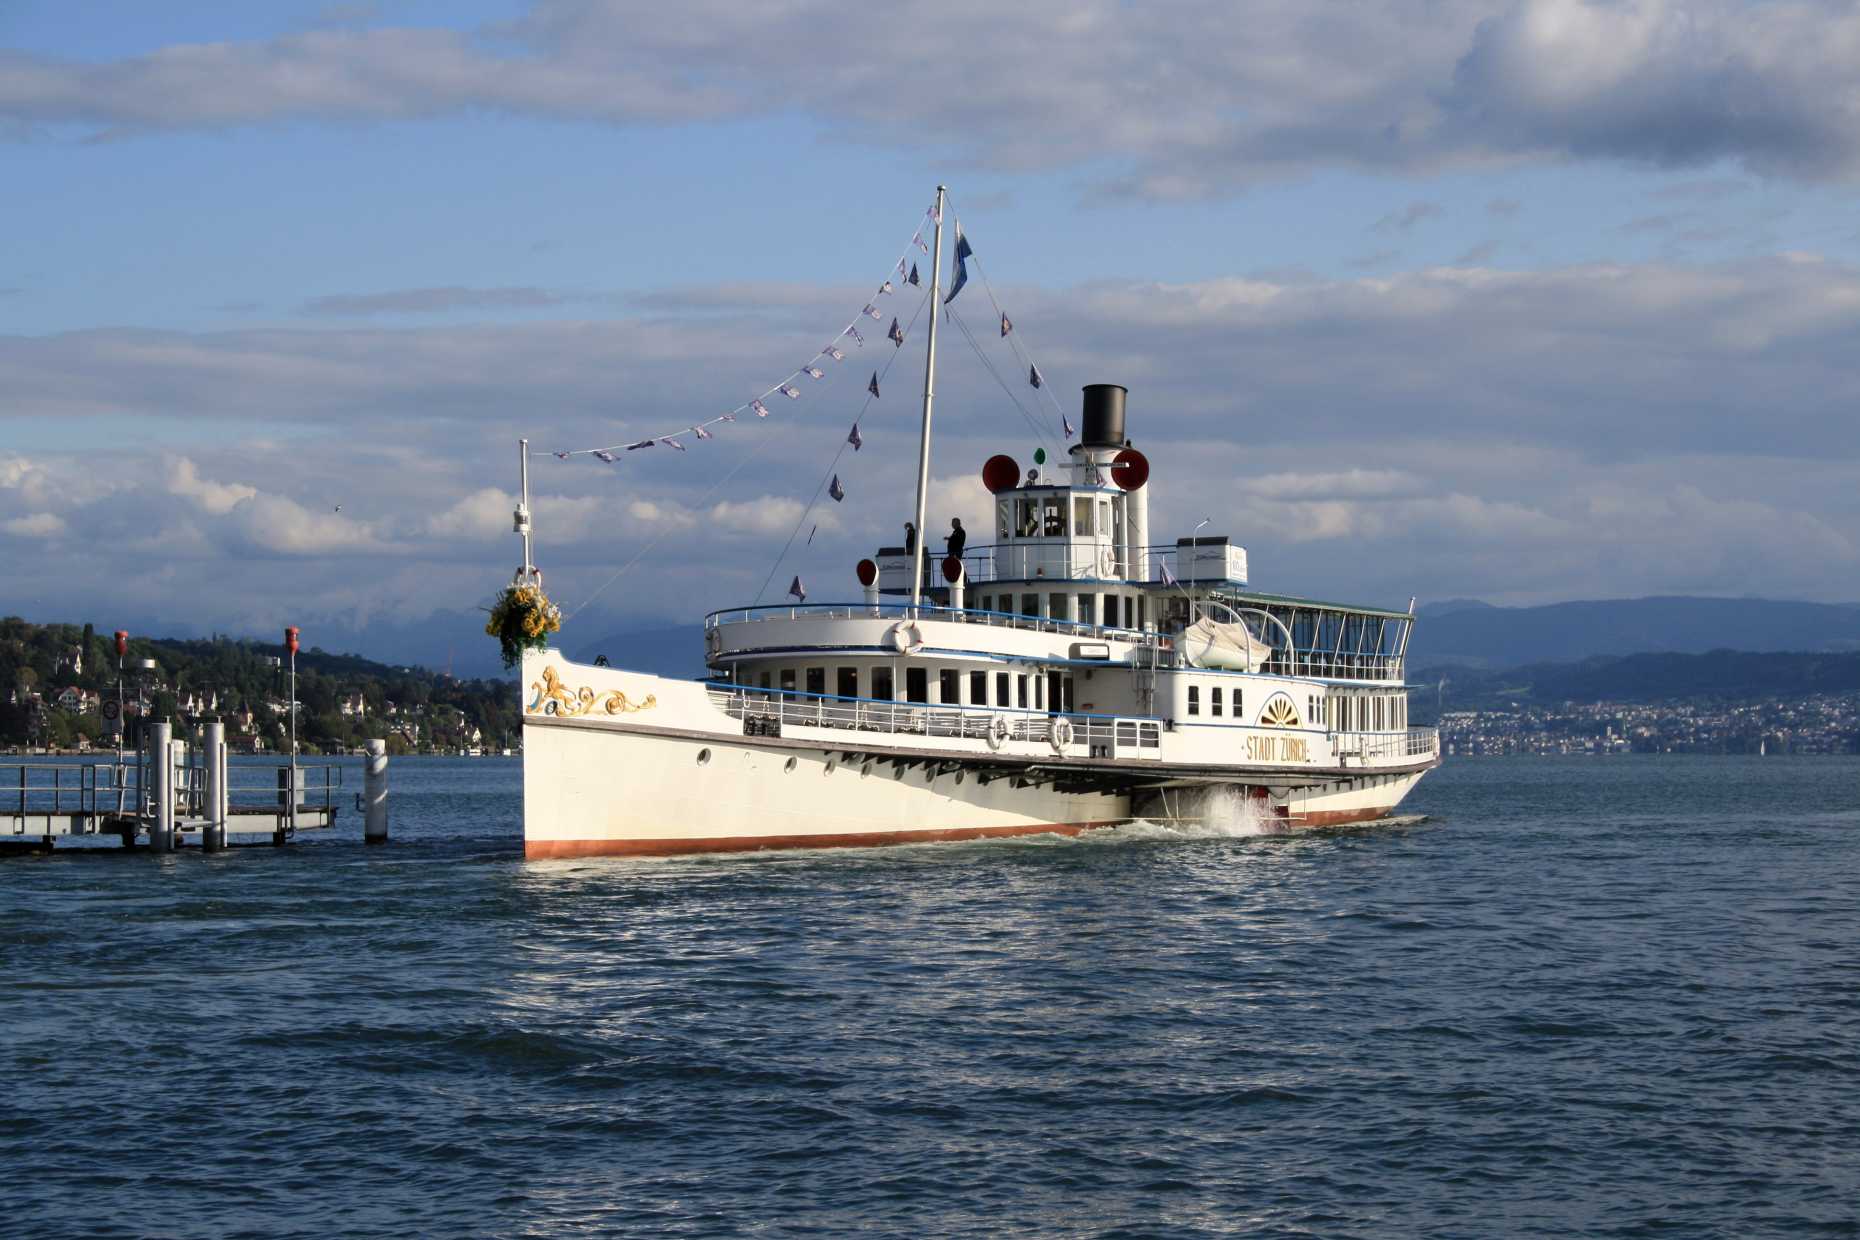 Enlarged view: Lake Zurich